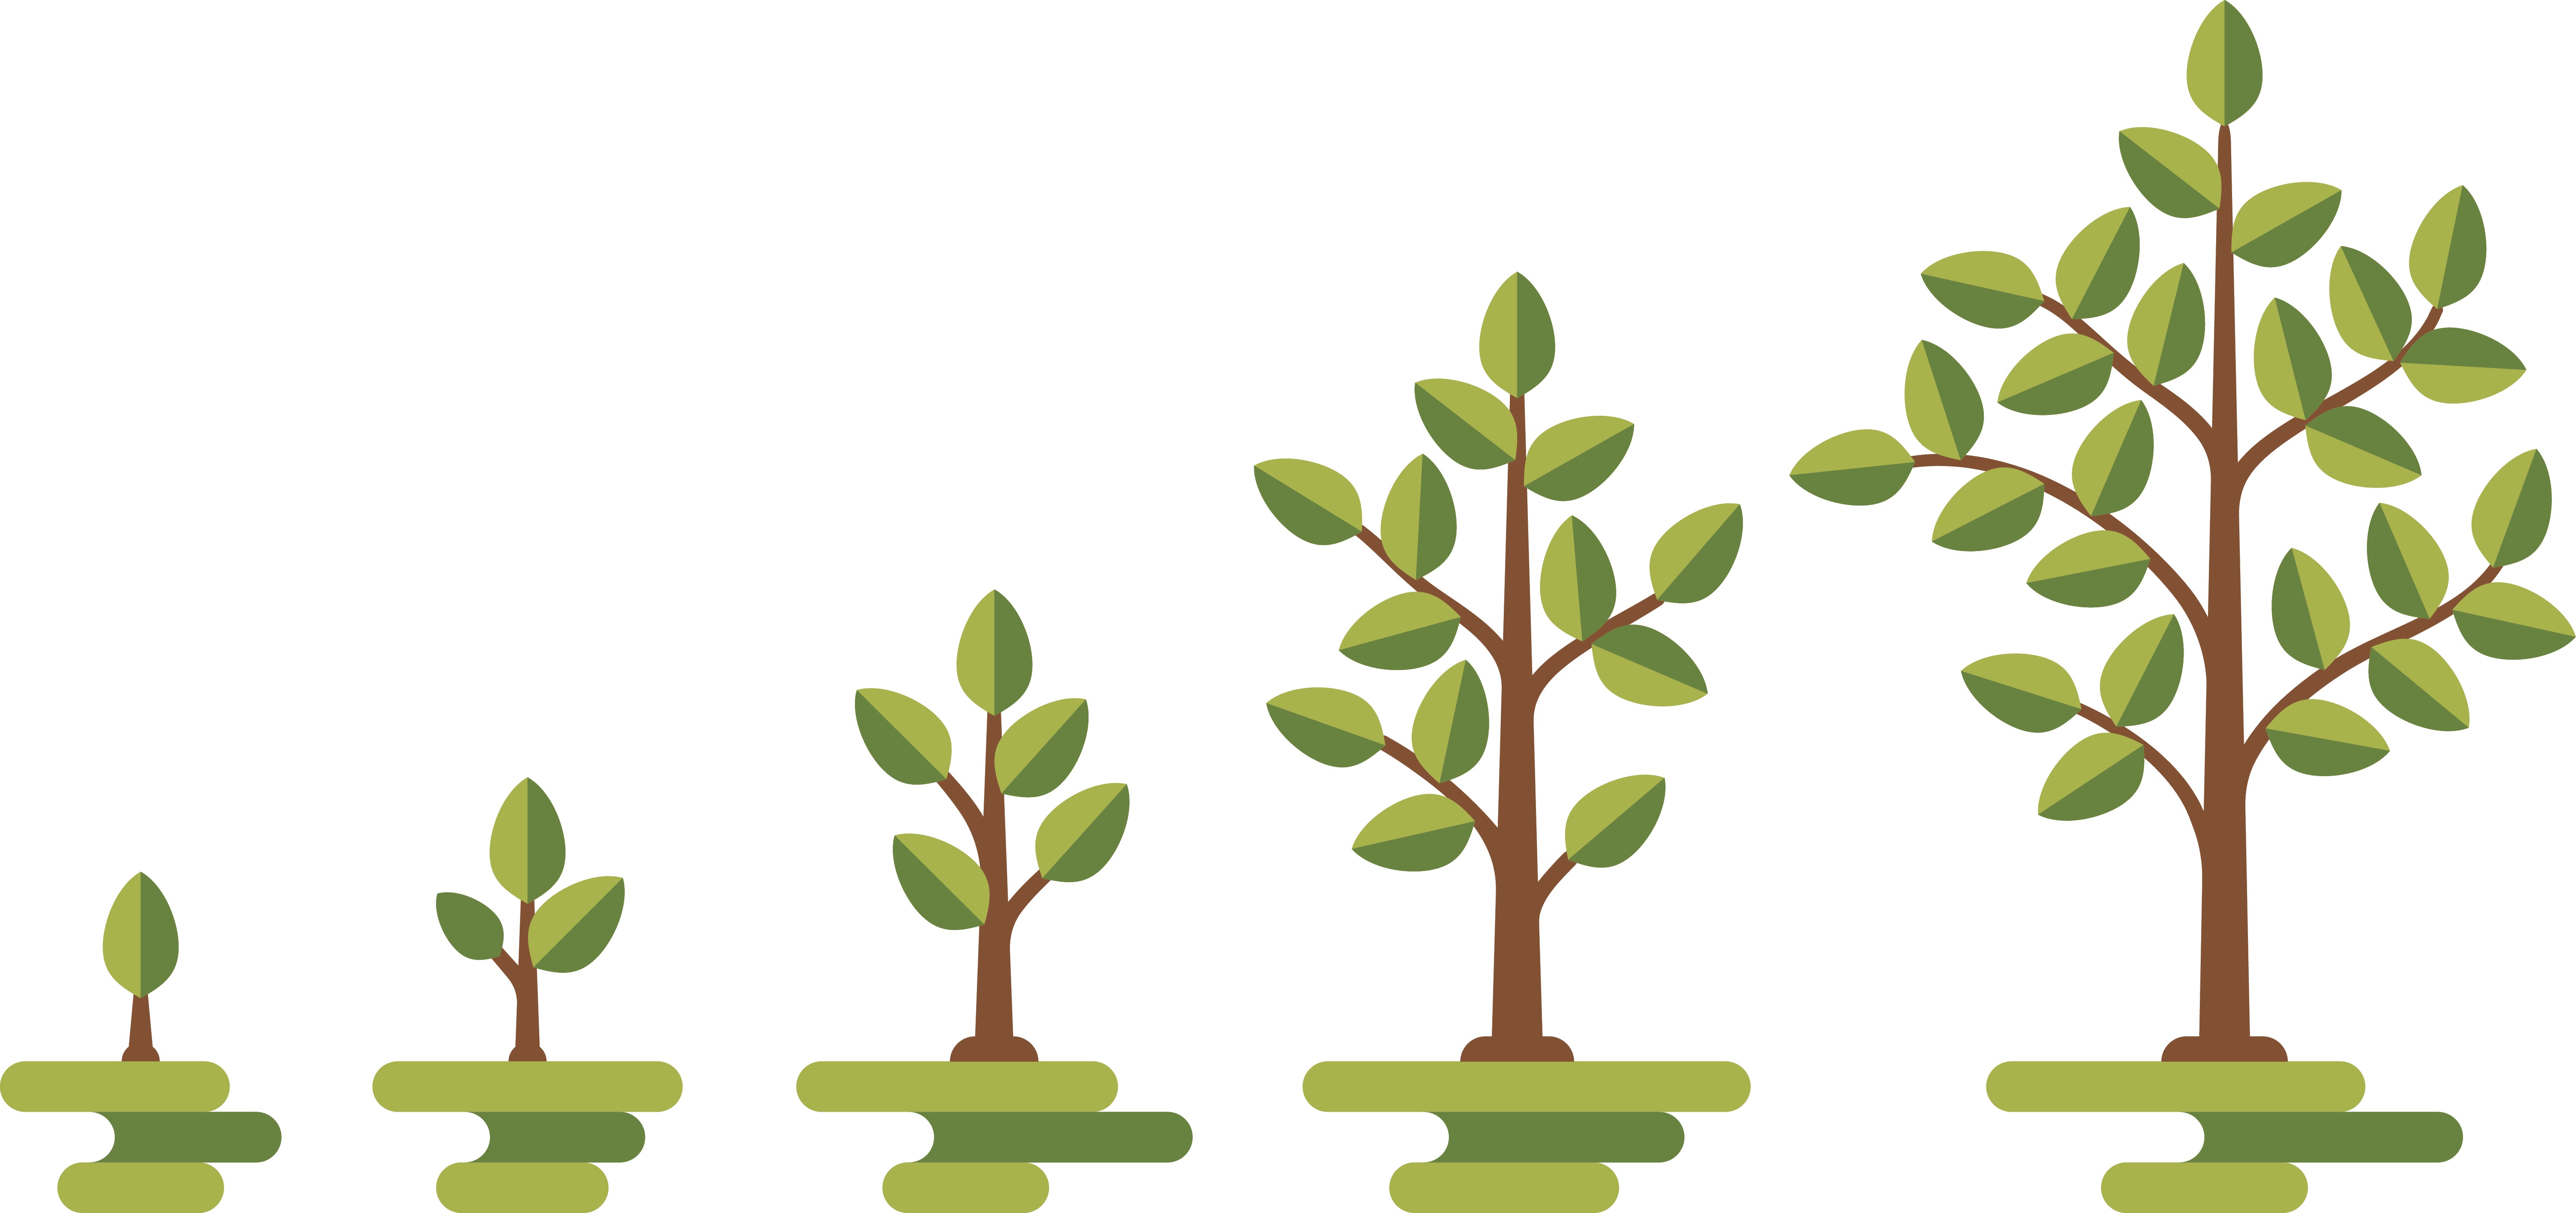 Tree-Growth-Illustration.jpg